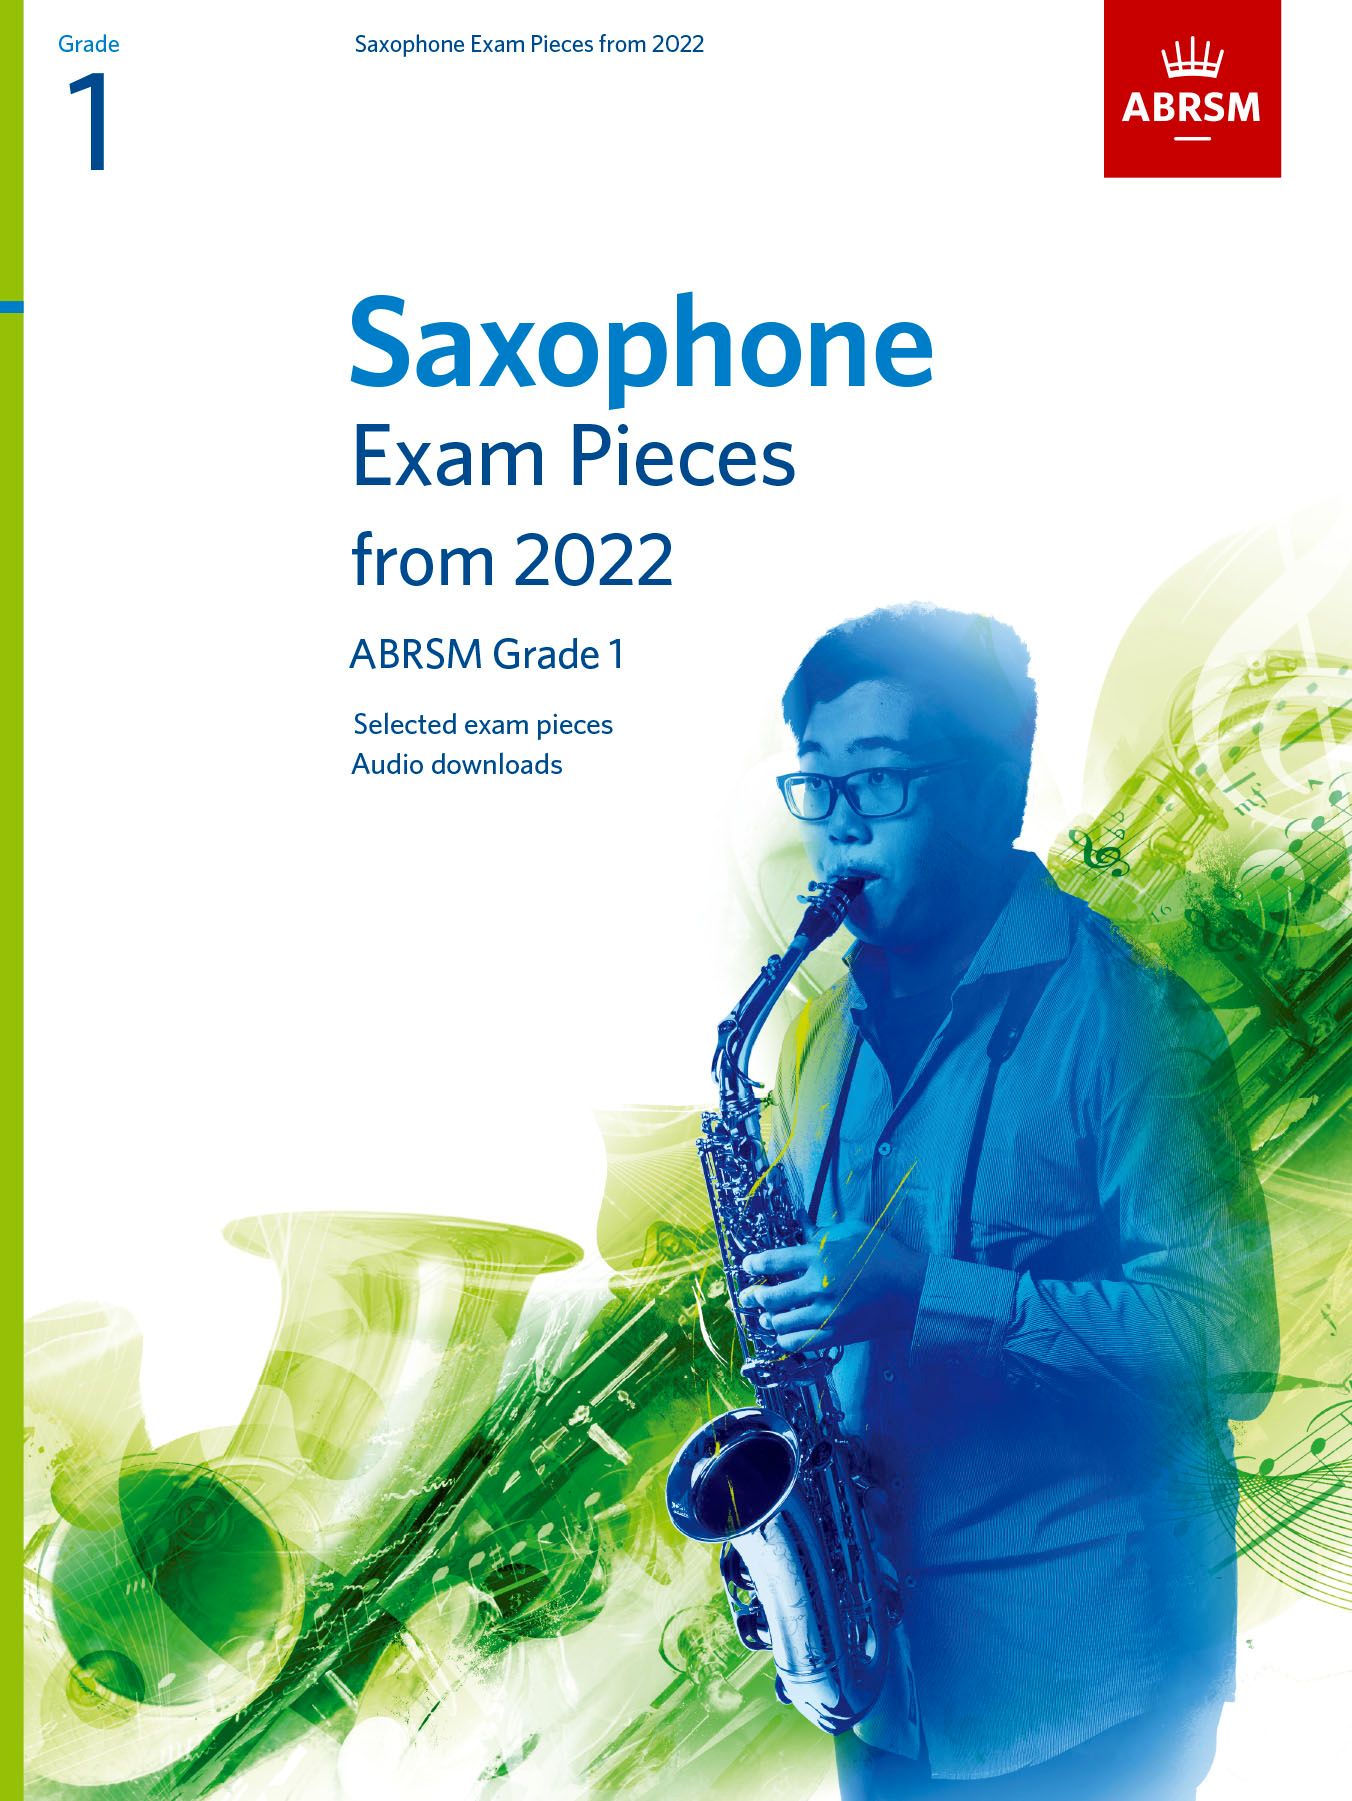 ABRSM Saxophone Exam Pieces from 2022, Grade 1